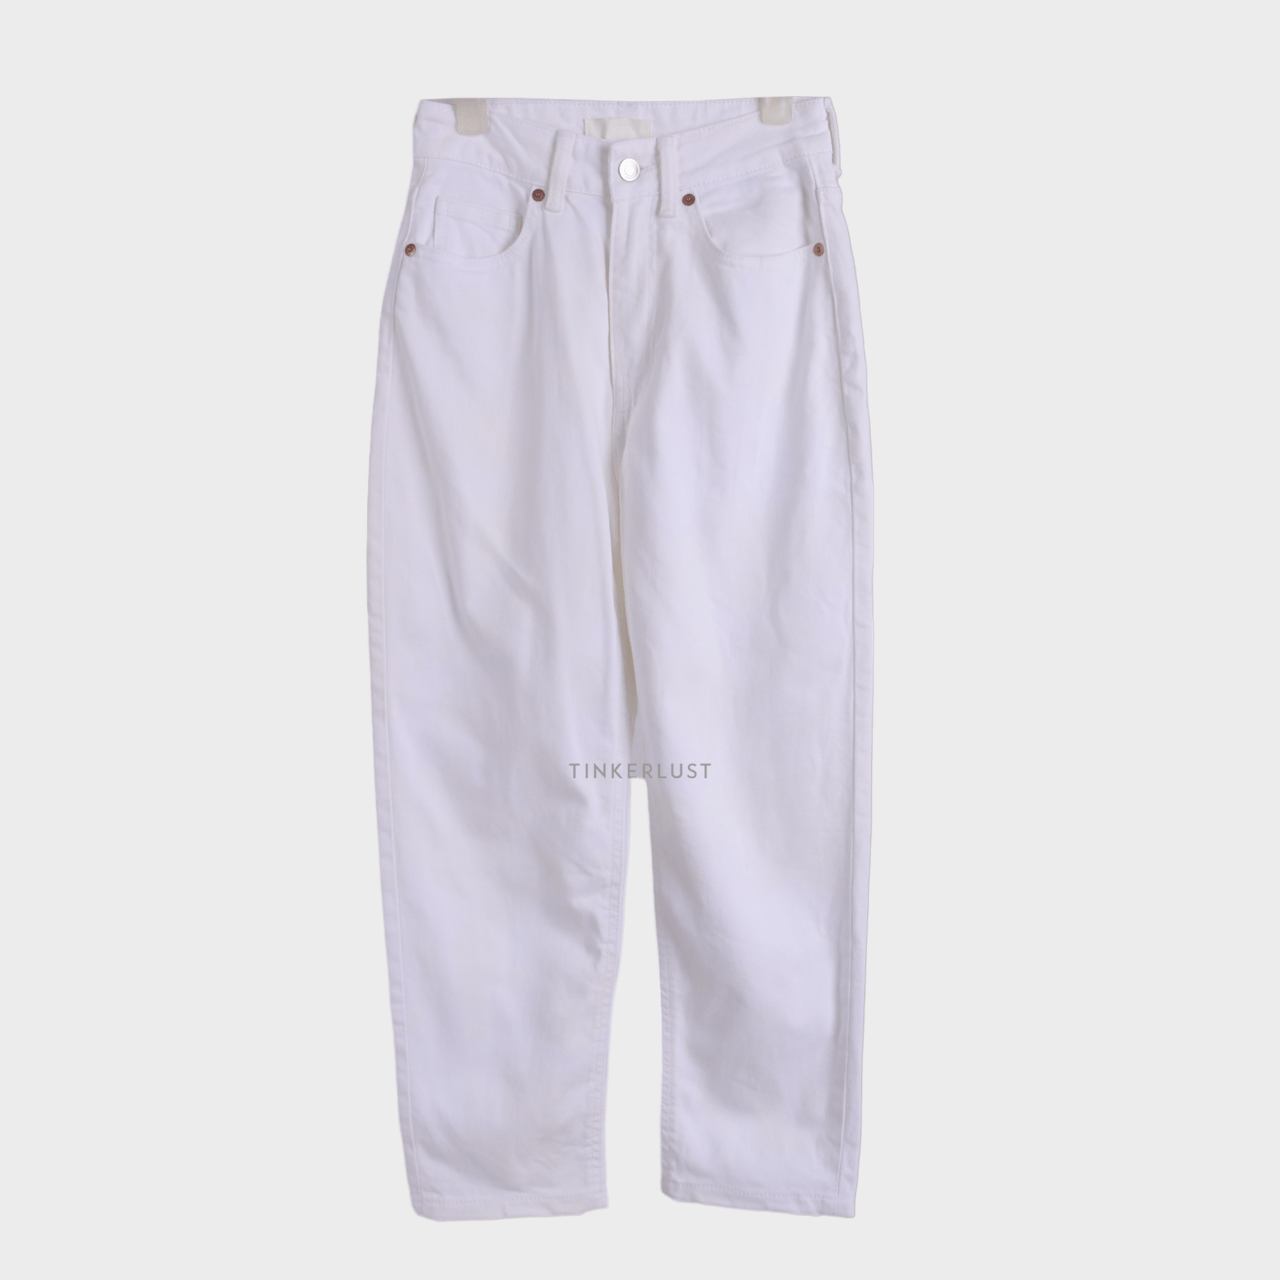 H&M White High Waist Jeans Long Pants